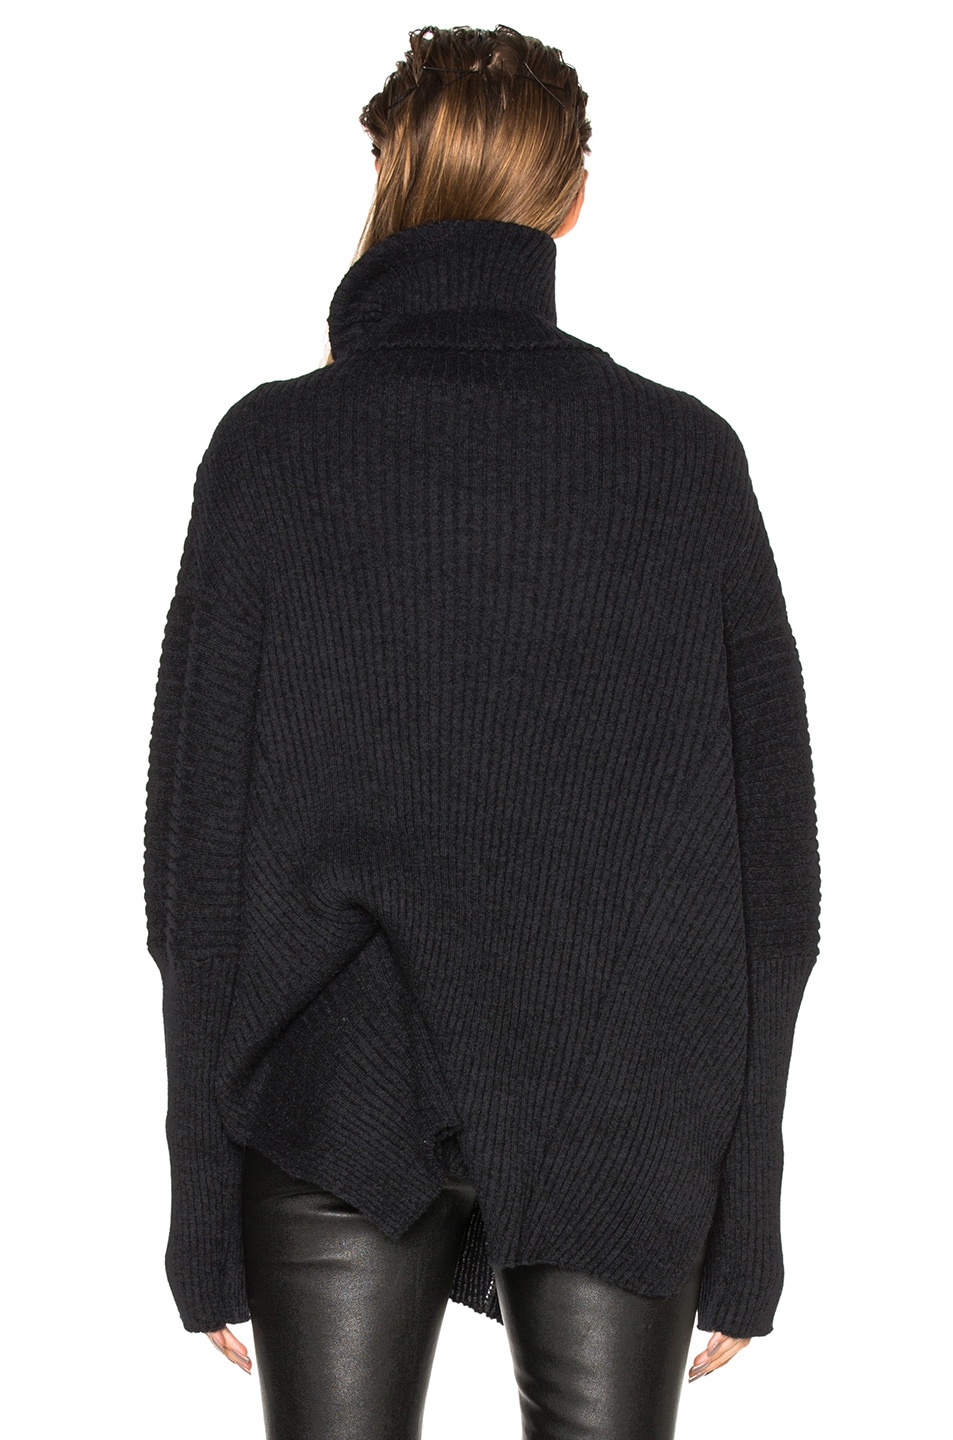 ANN DEMEULEMEESTER Wool Turtleneck Asymmetric Sweater, Black - ModeSens